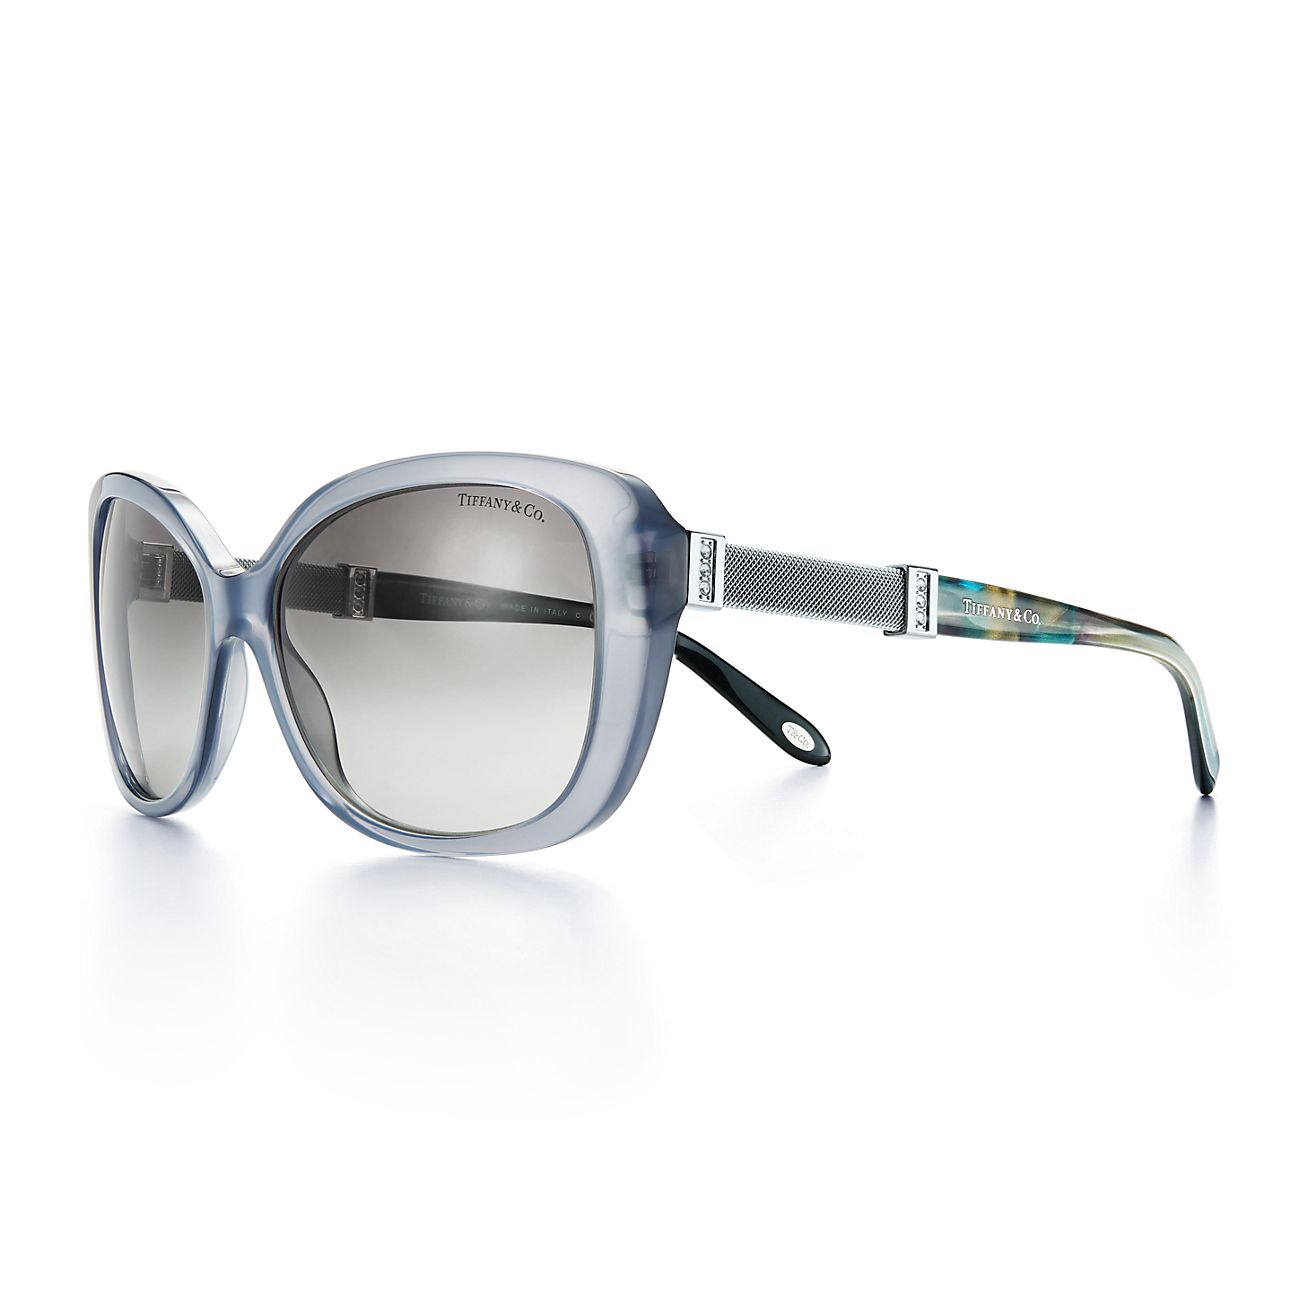 tiffany cateye sunglasses